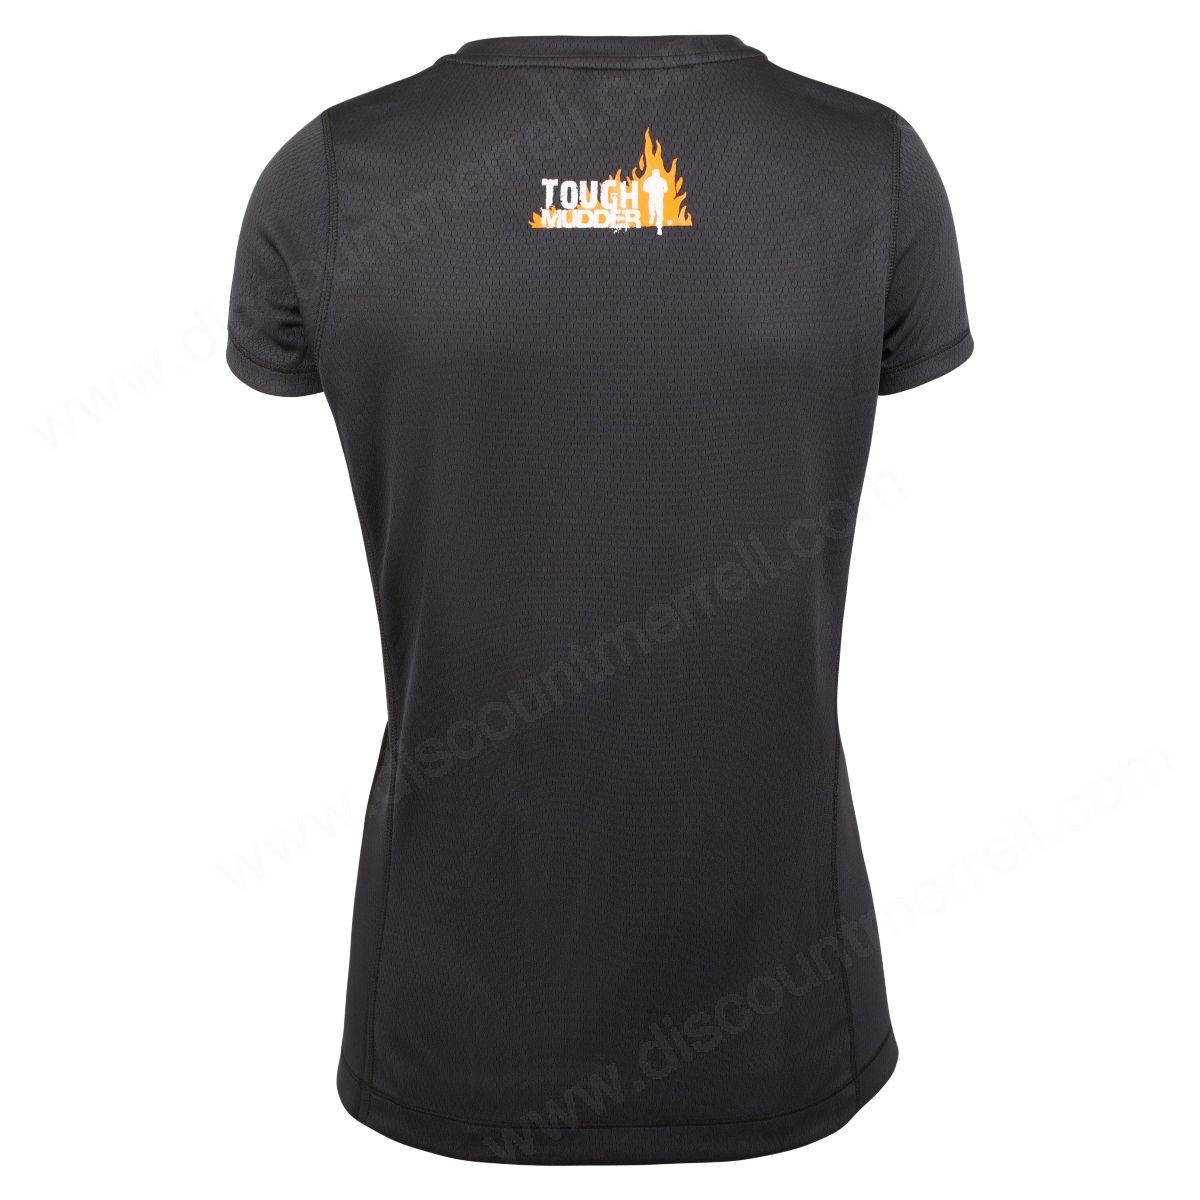 Merrell Woman's Tough Mudder Fastrex Short Sleeve Tech Shirt Black/white - -1